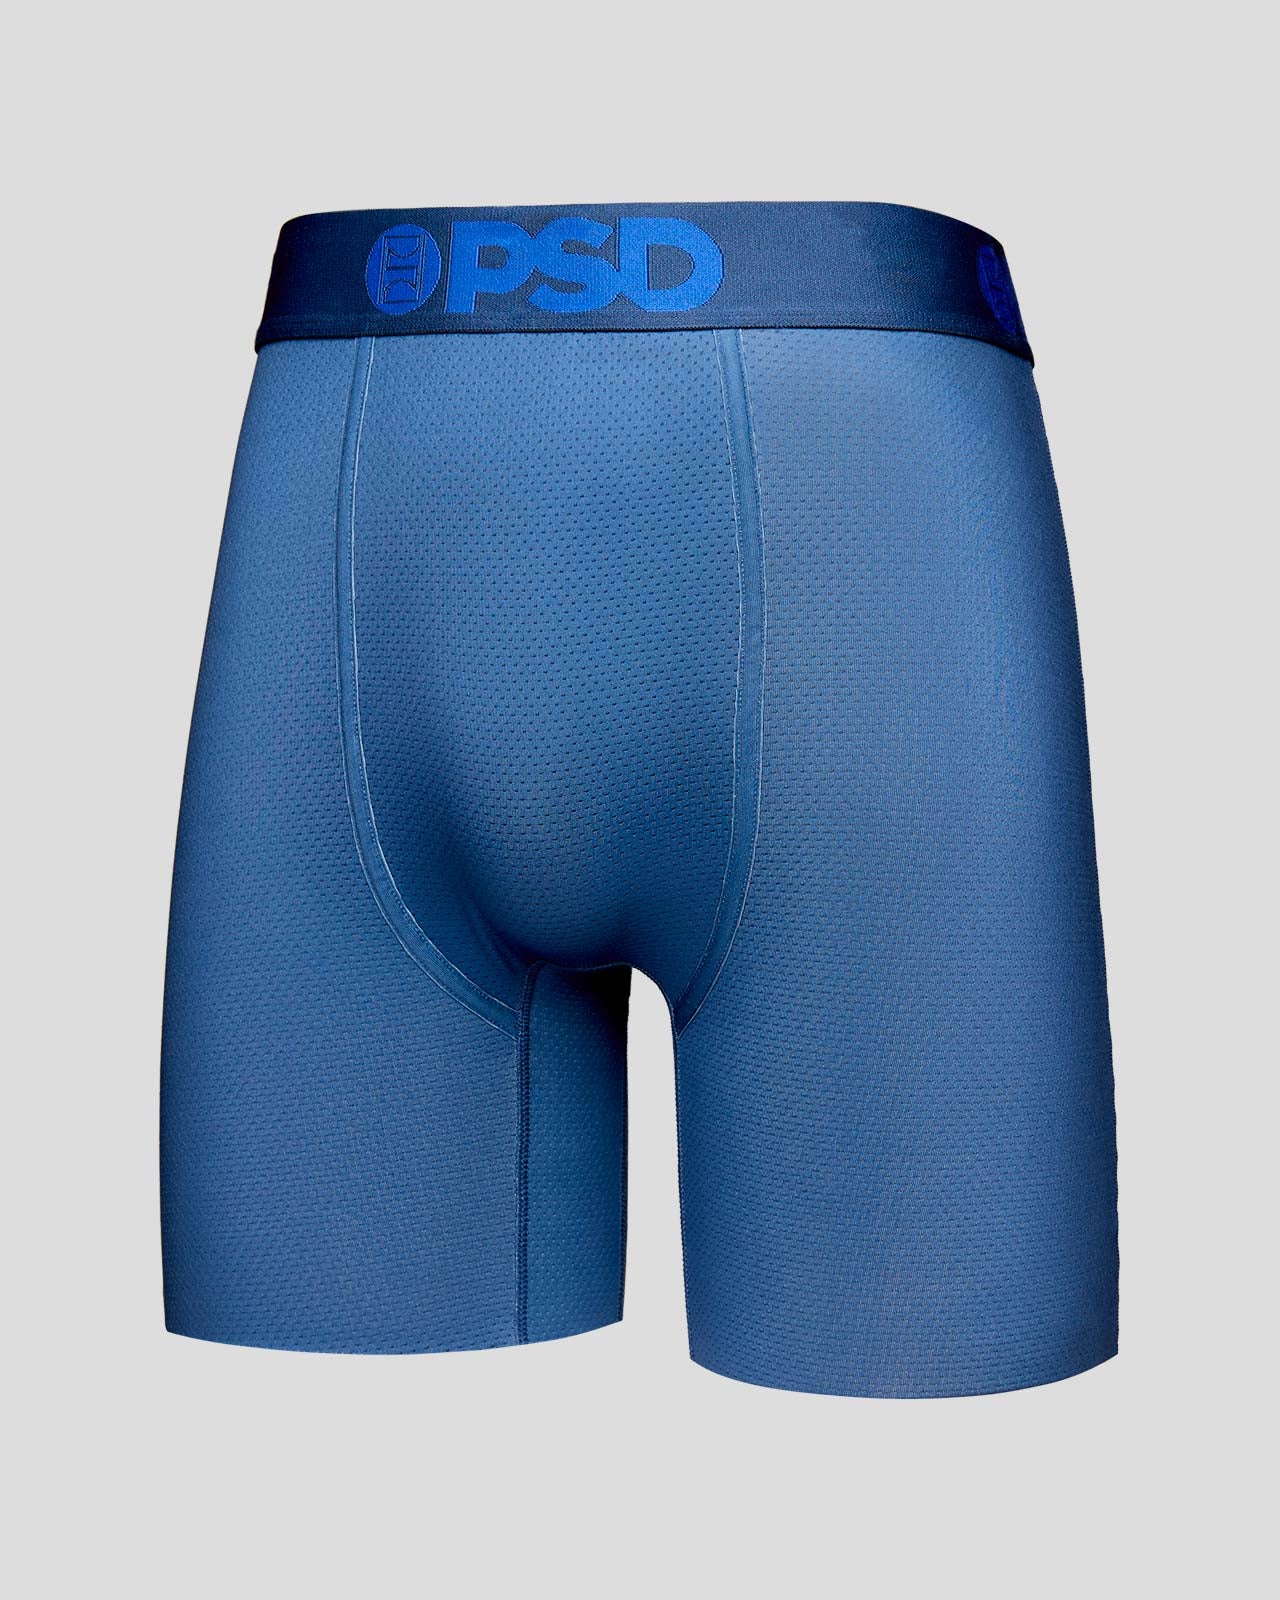 PSD Underwear Women's Biker Short, Wide Elastic Band, Stretch Fabric,  Athletic Fit